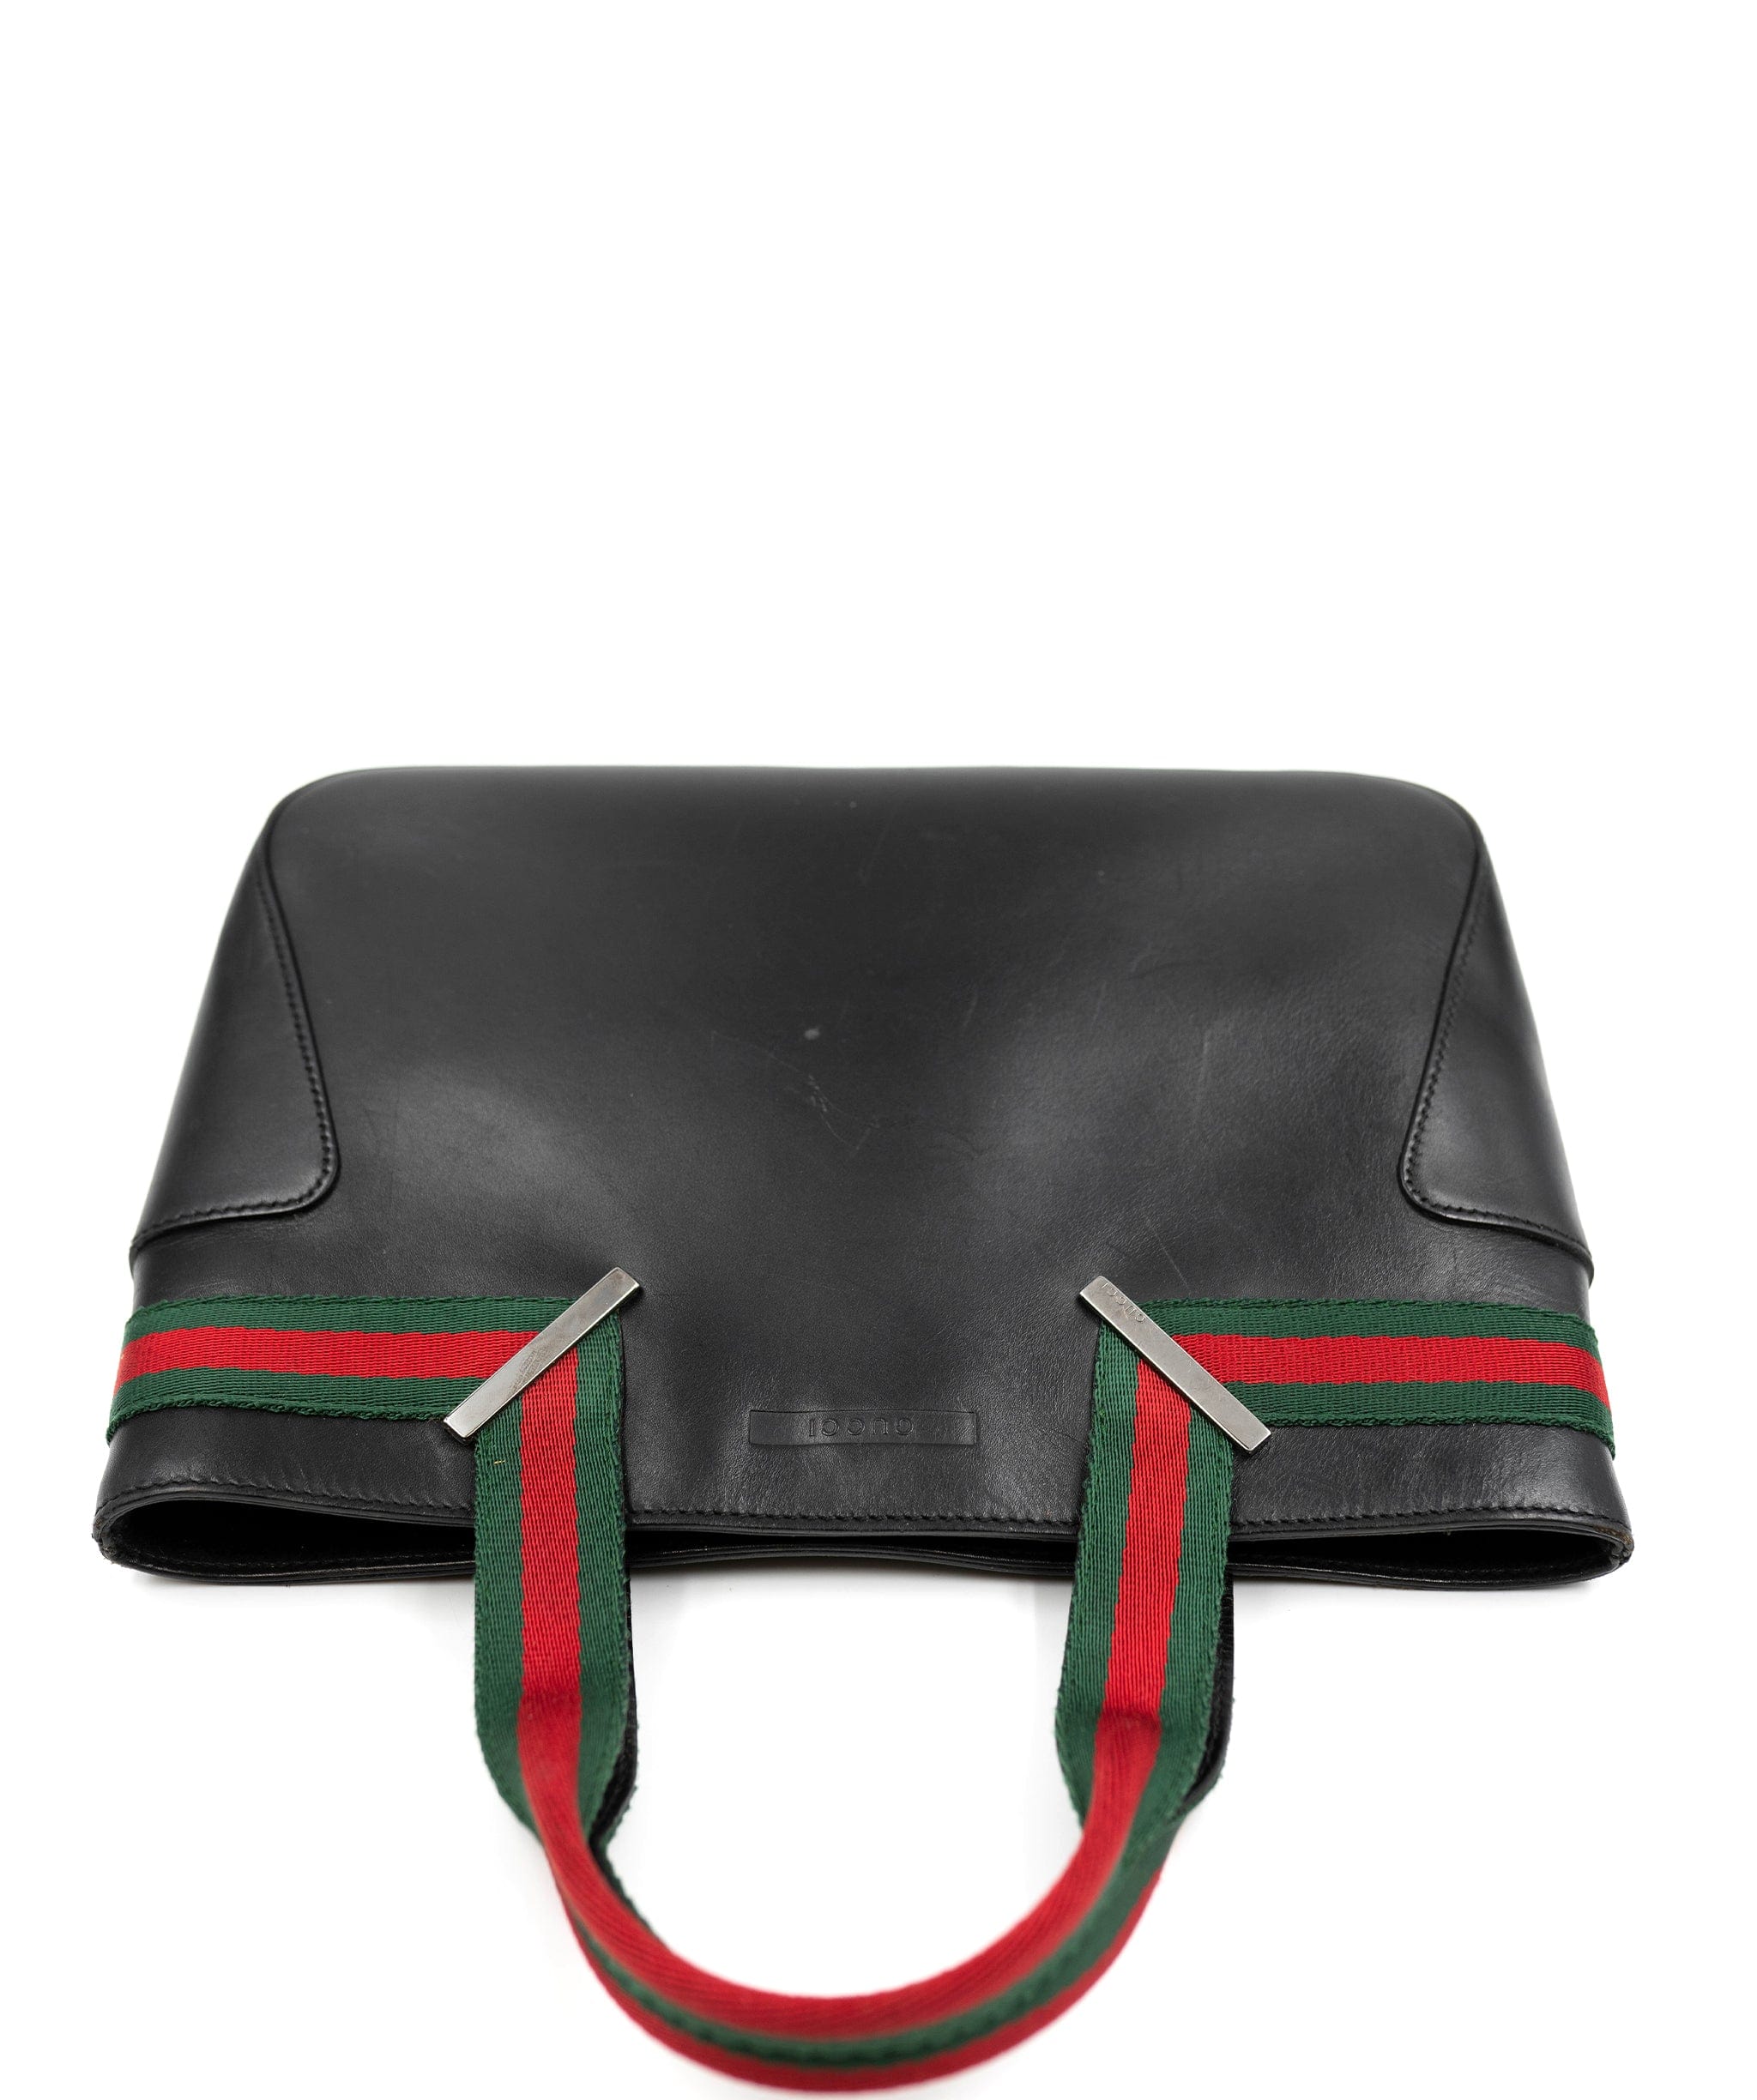 Gucci Vintage Gucci black leather handbag - AGC1376